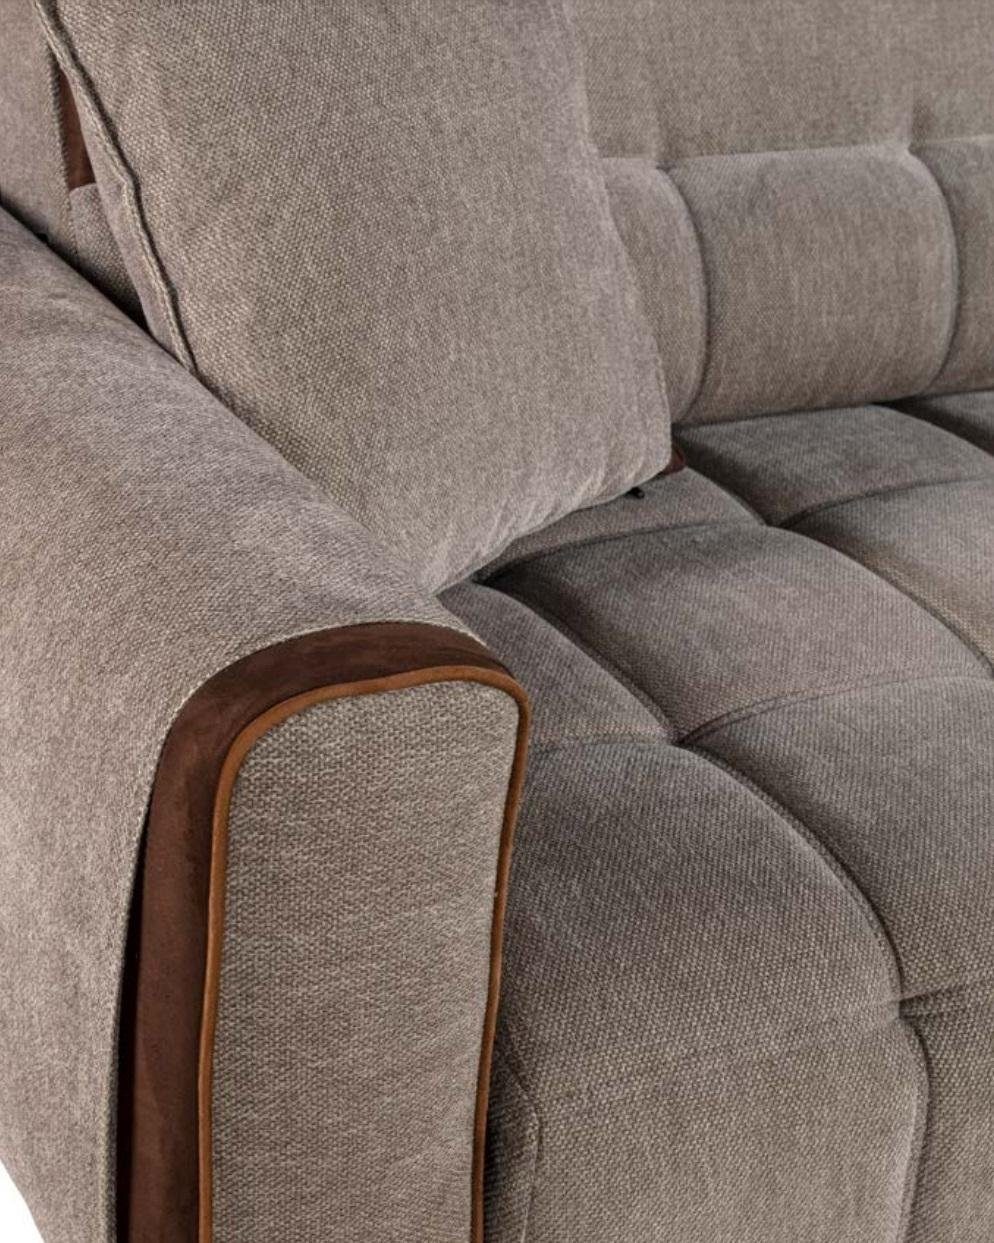 3 Moderne Europe Couch in Sofas Textil Garnitur, JVmoebel Made Sofa Sitz Sofa Polster